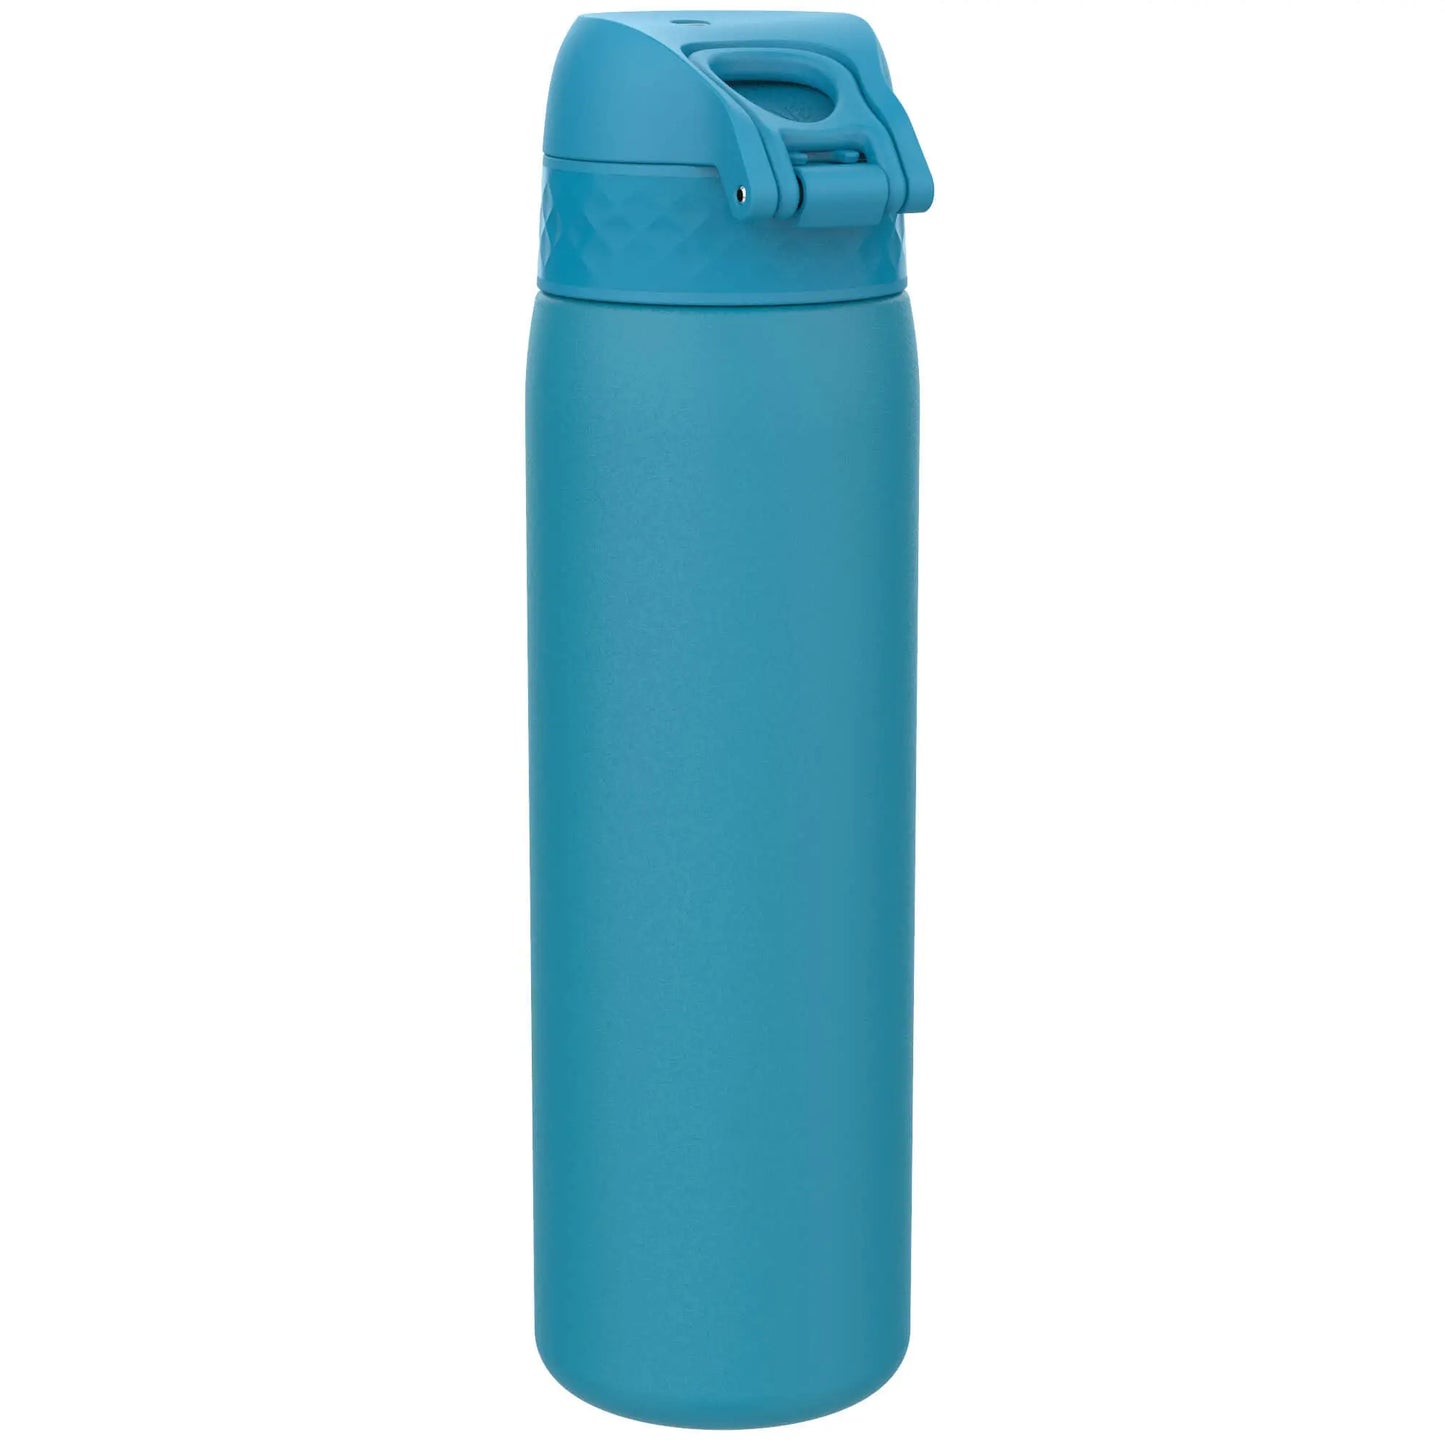 Leak Proof Slim Water Bottle, Stainless Steel, Blue, 600ml (20oz) - ION8